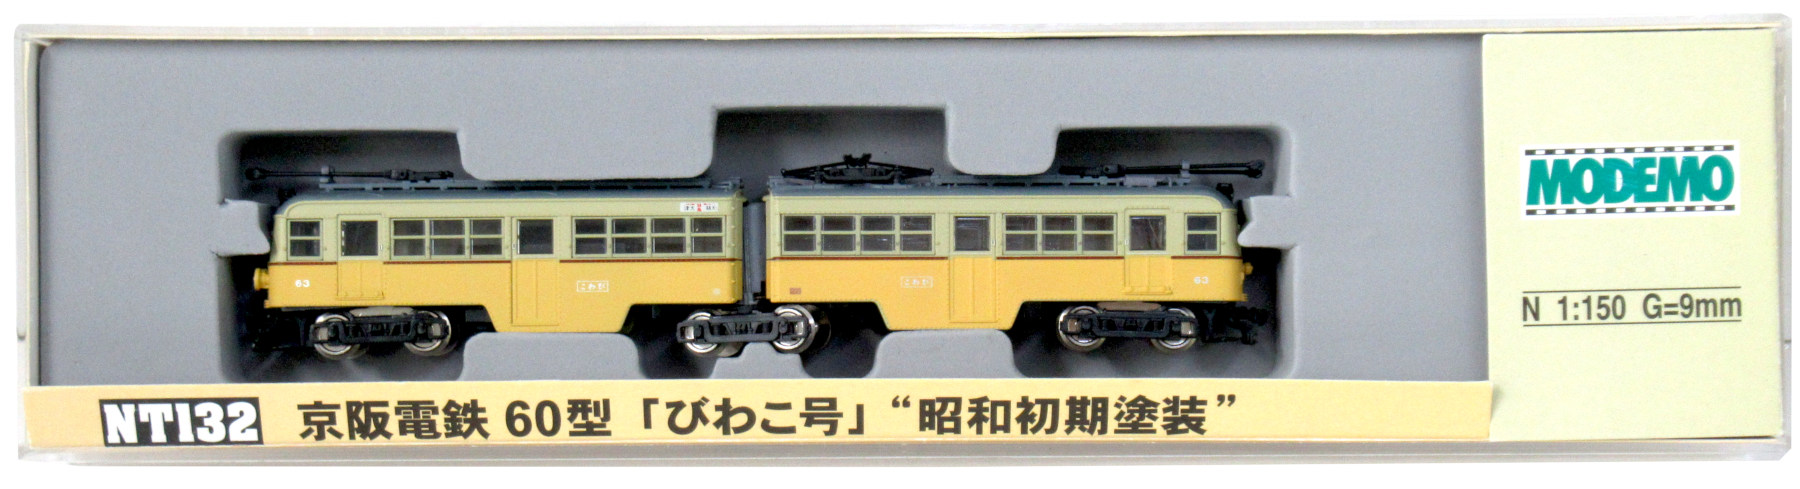 MODEMO 京阪電鉄 60型 「びわこ号」“昭和初期塗装”nt132 - 鉄道模型